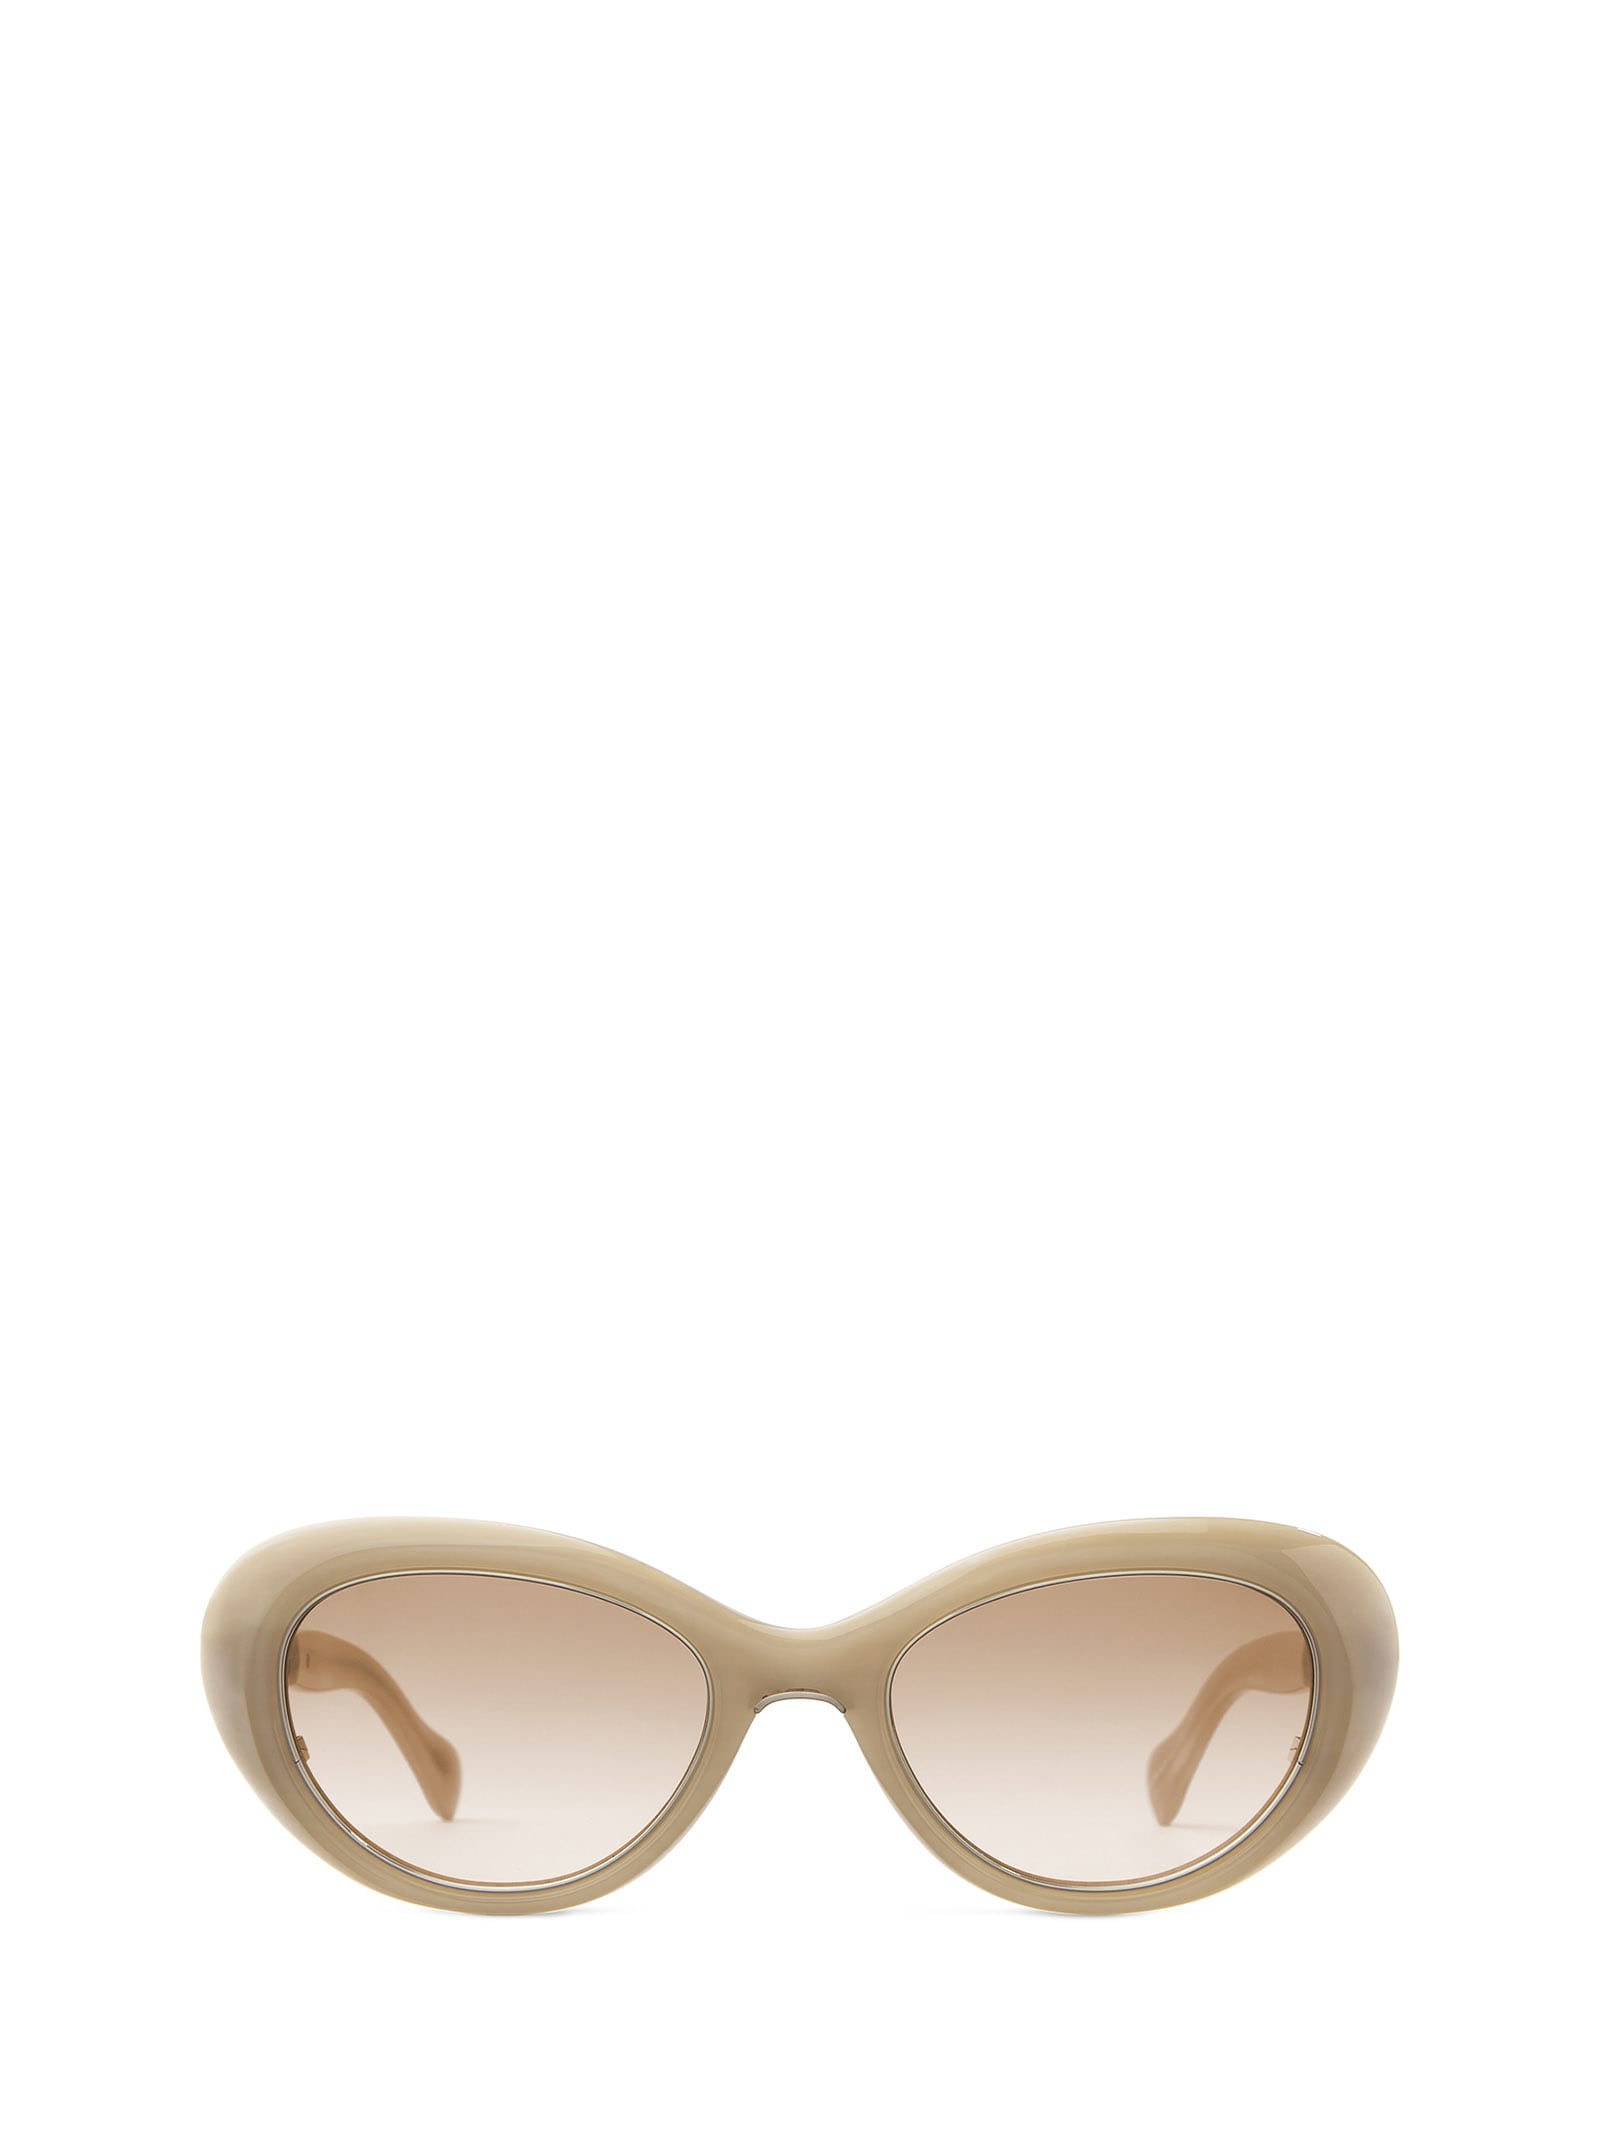 Mr Leight Selma S Desert Sand Sunglasses